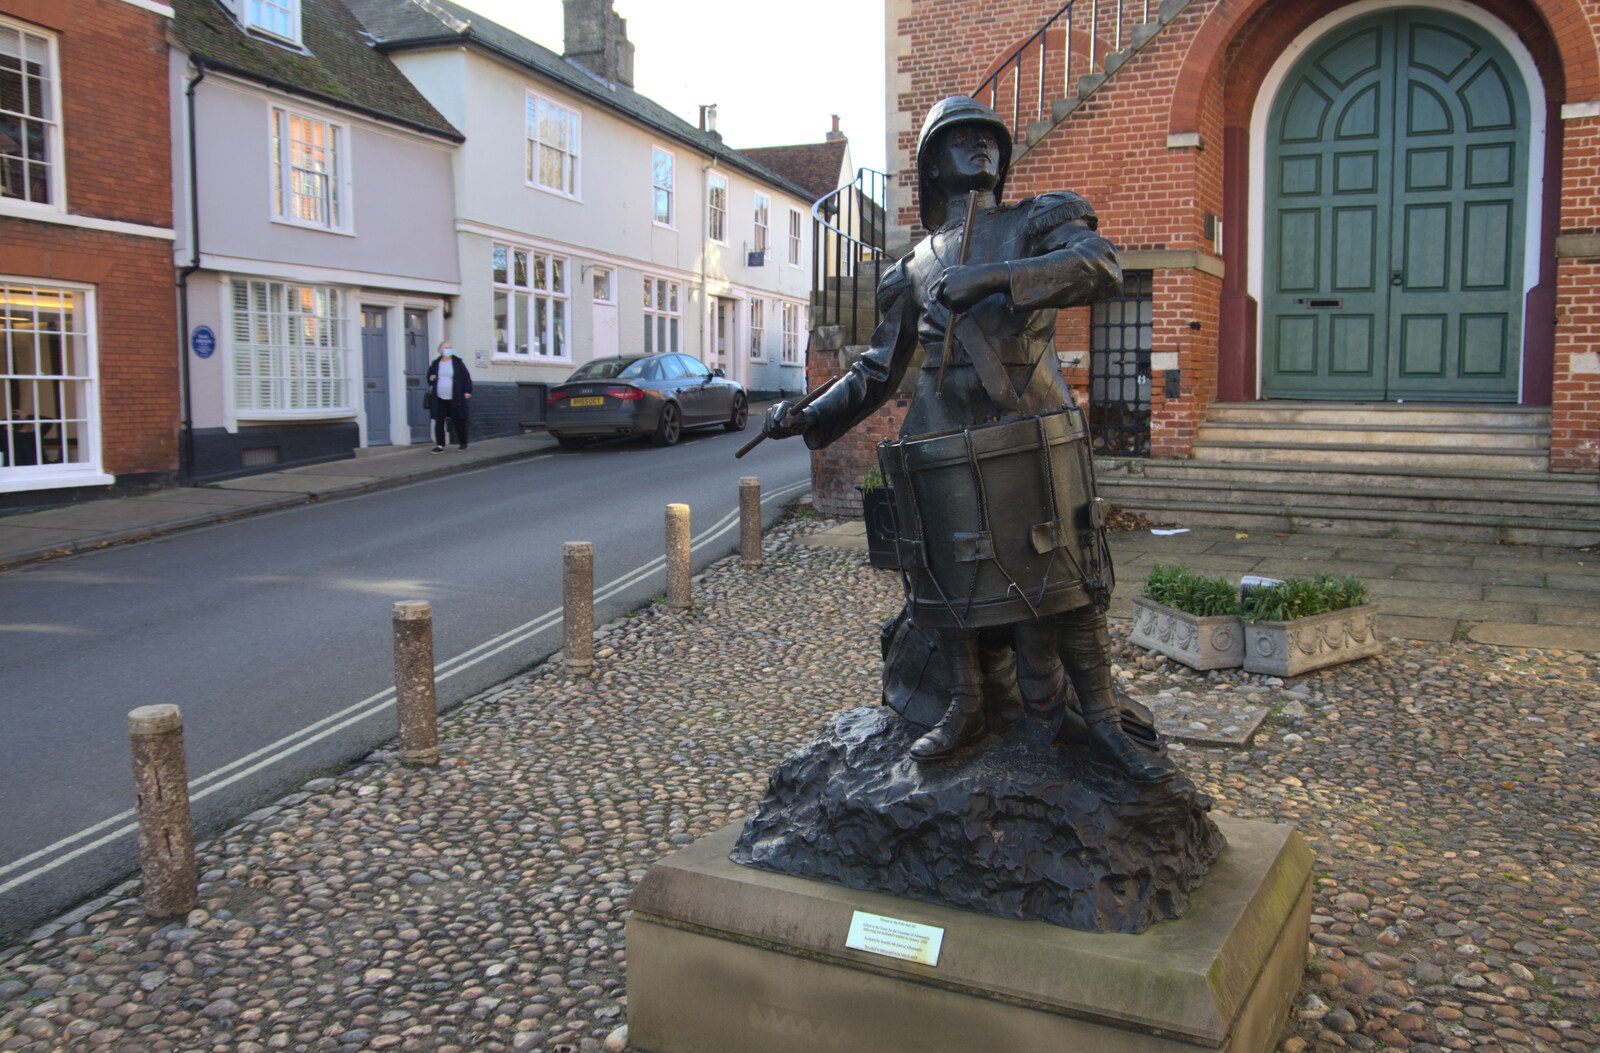 A drumming soldier statue on Seckford Street from Isobel's Birthday, Woodbridge, Suffolk - 2nd November 2020